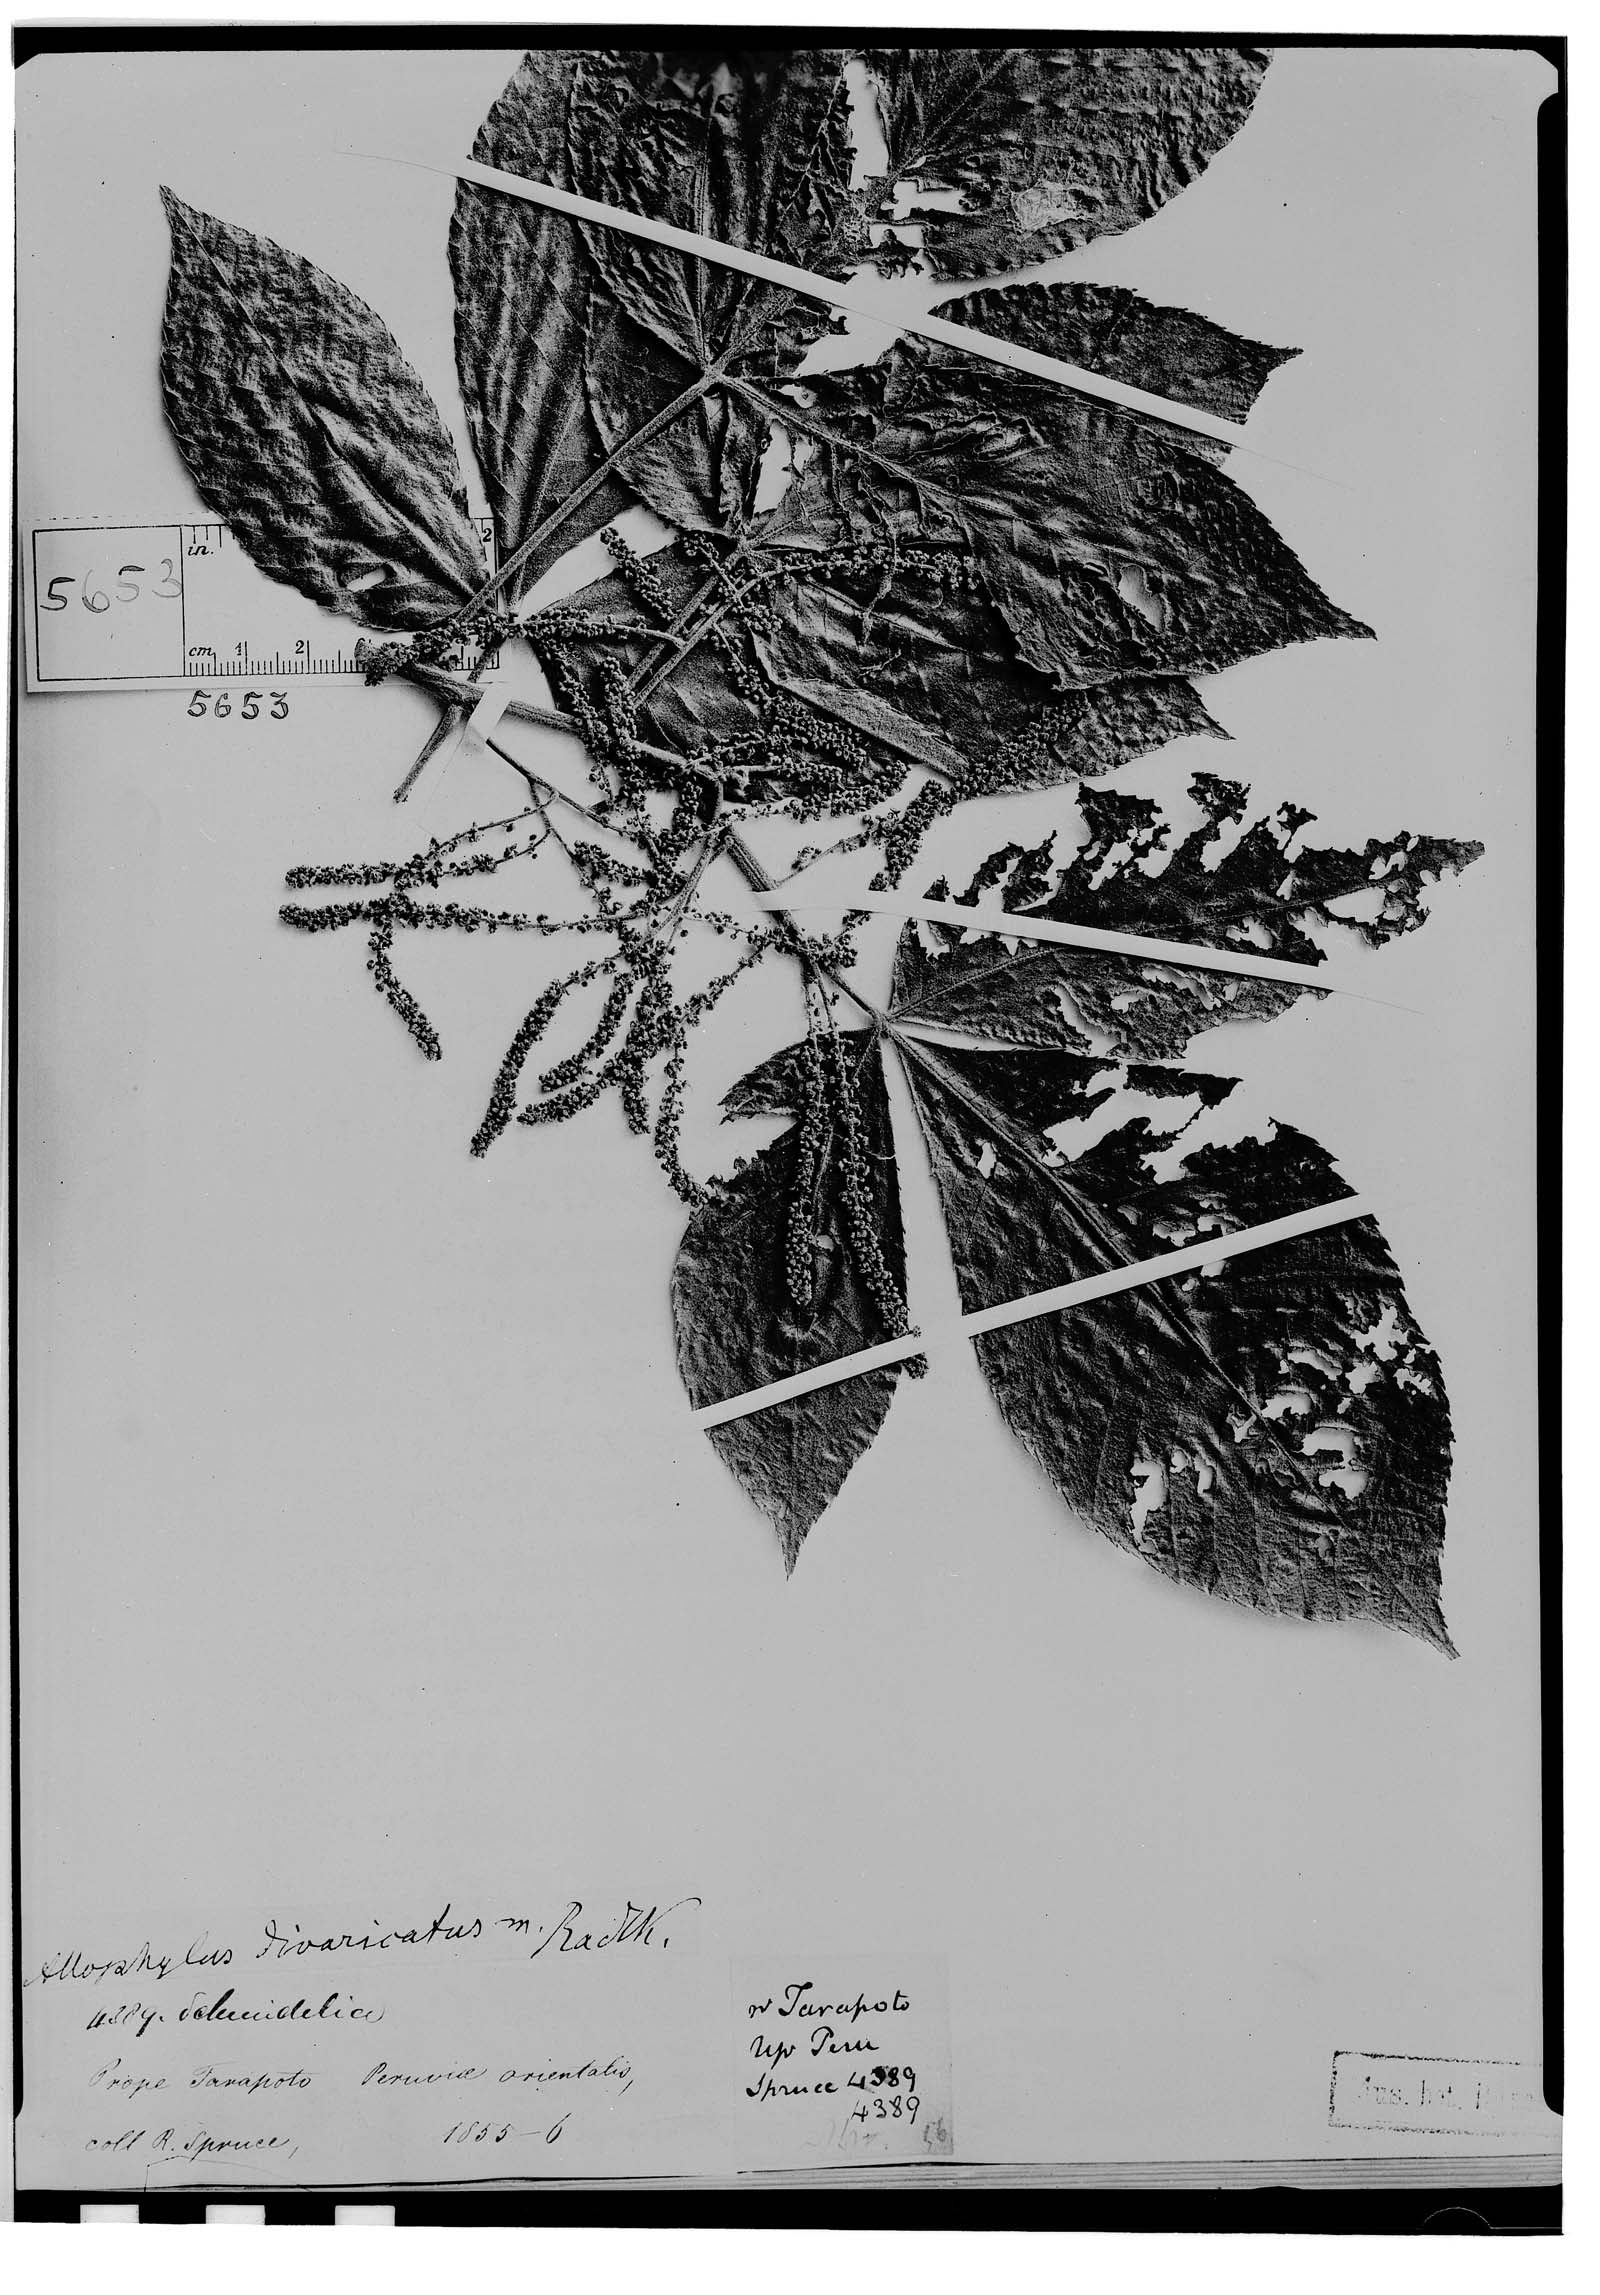 Allophylus divaricatus image